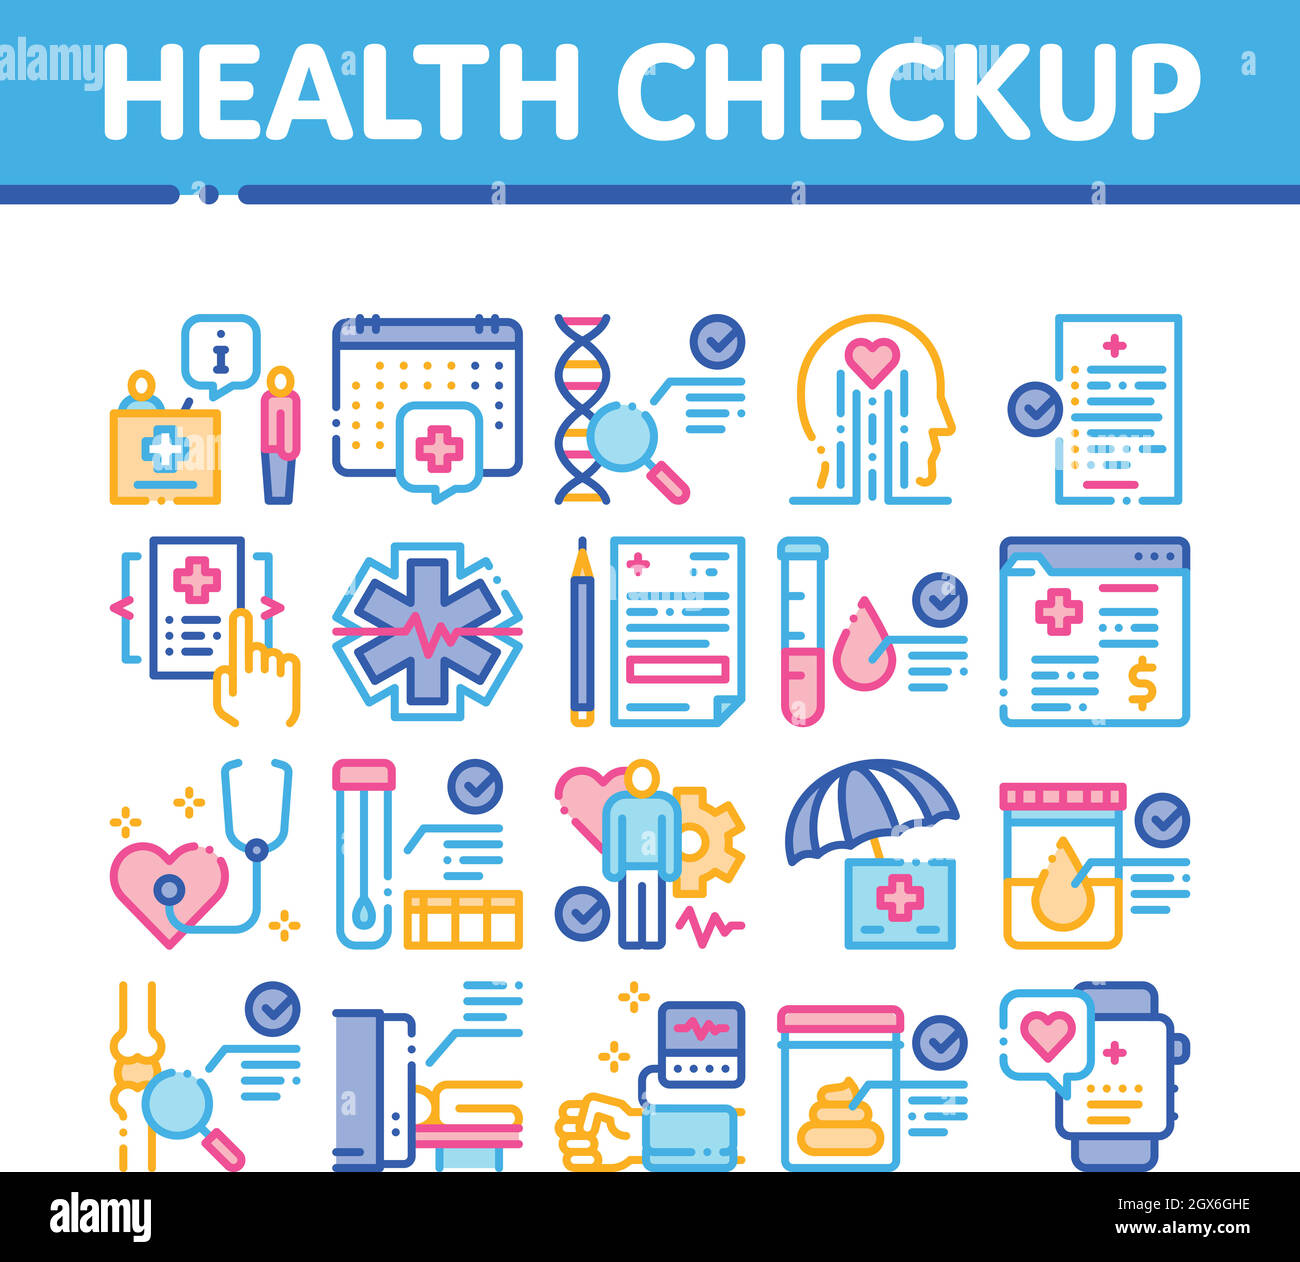 Health Checkup Medical Collection Icons Set Vector Illustration de Vecteur